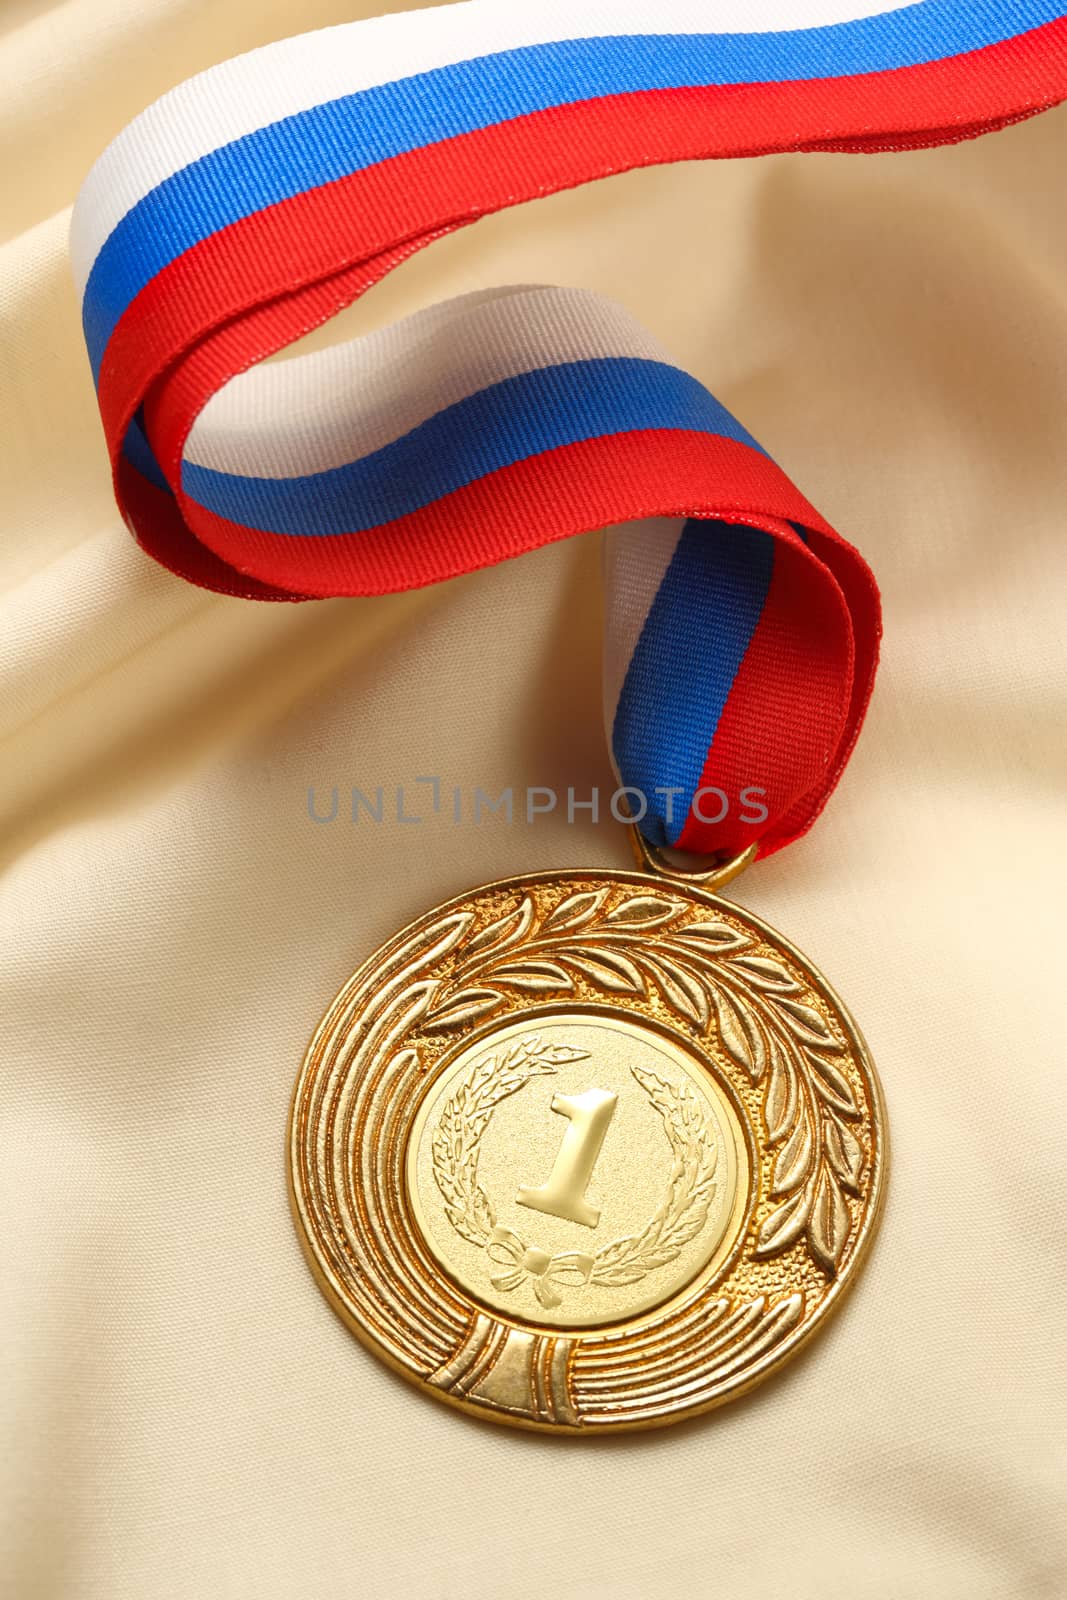 Metal medal first place by Garsya